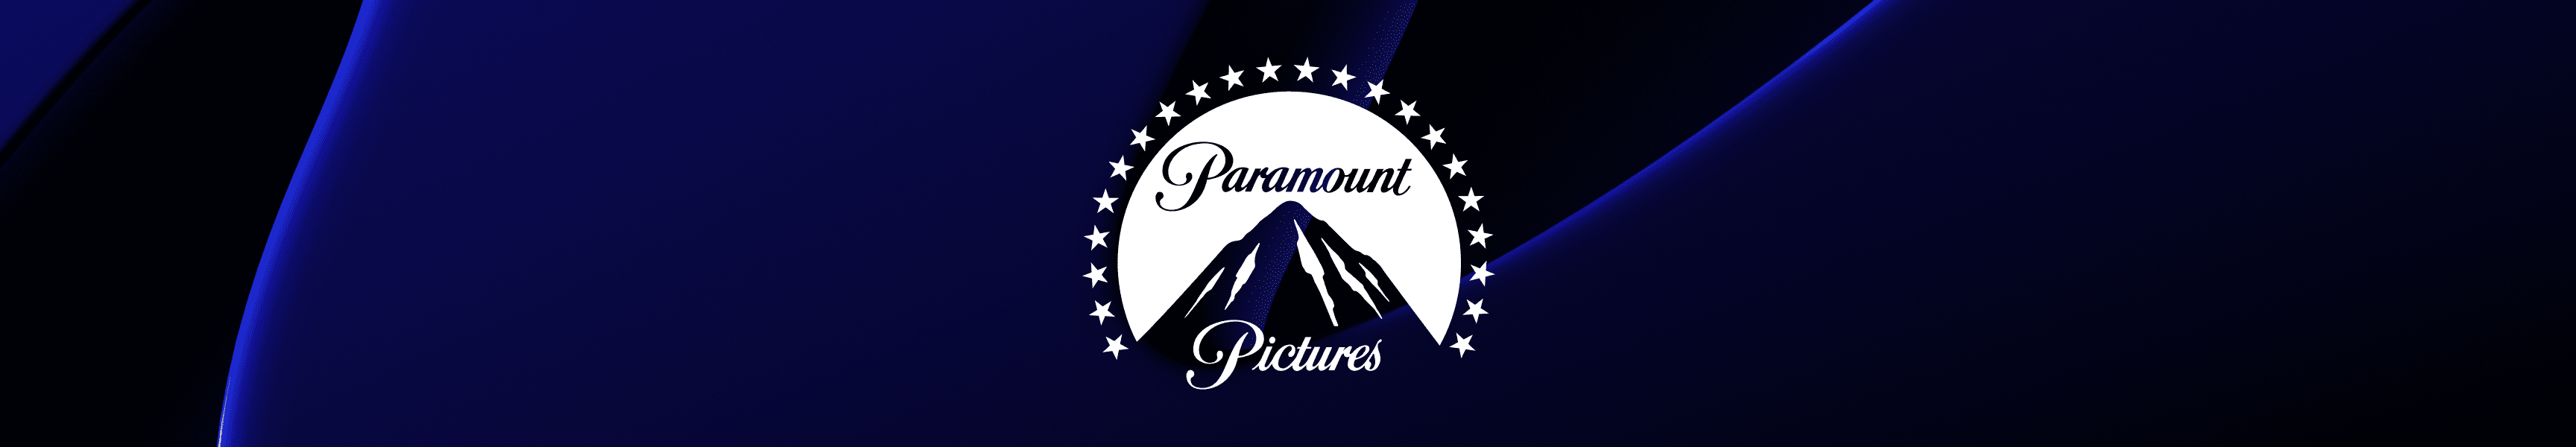 Paramount Pictures Mantas